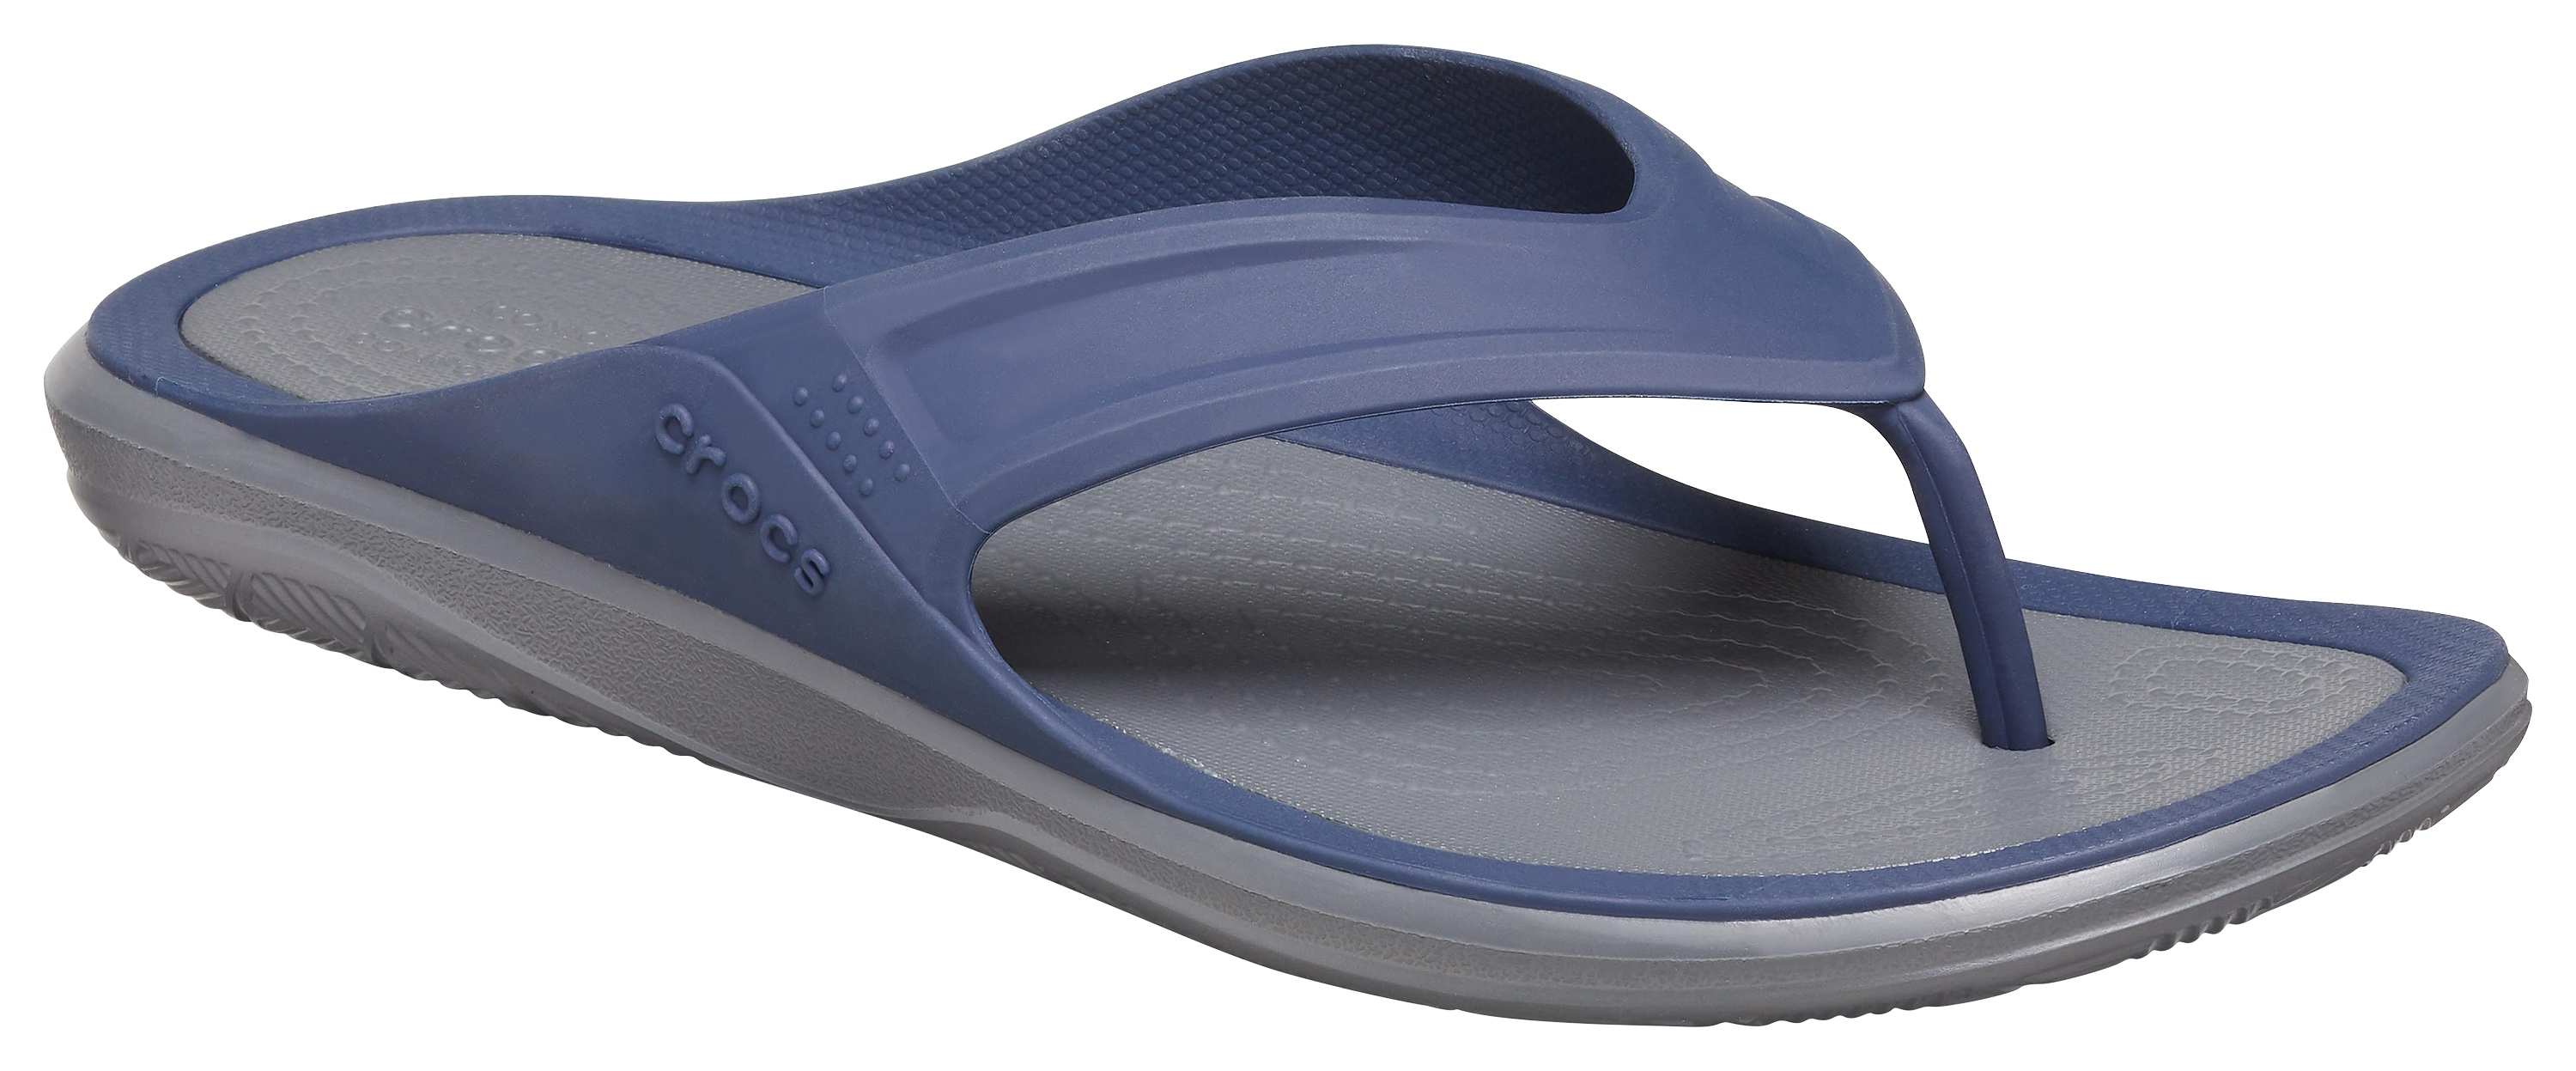 Crocs Swiftwater Wave Flip Thong Sandals for Men - Navy/Slate Grey - 10M